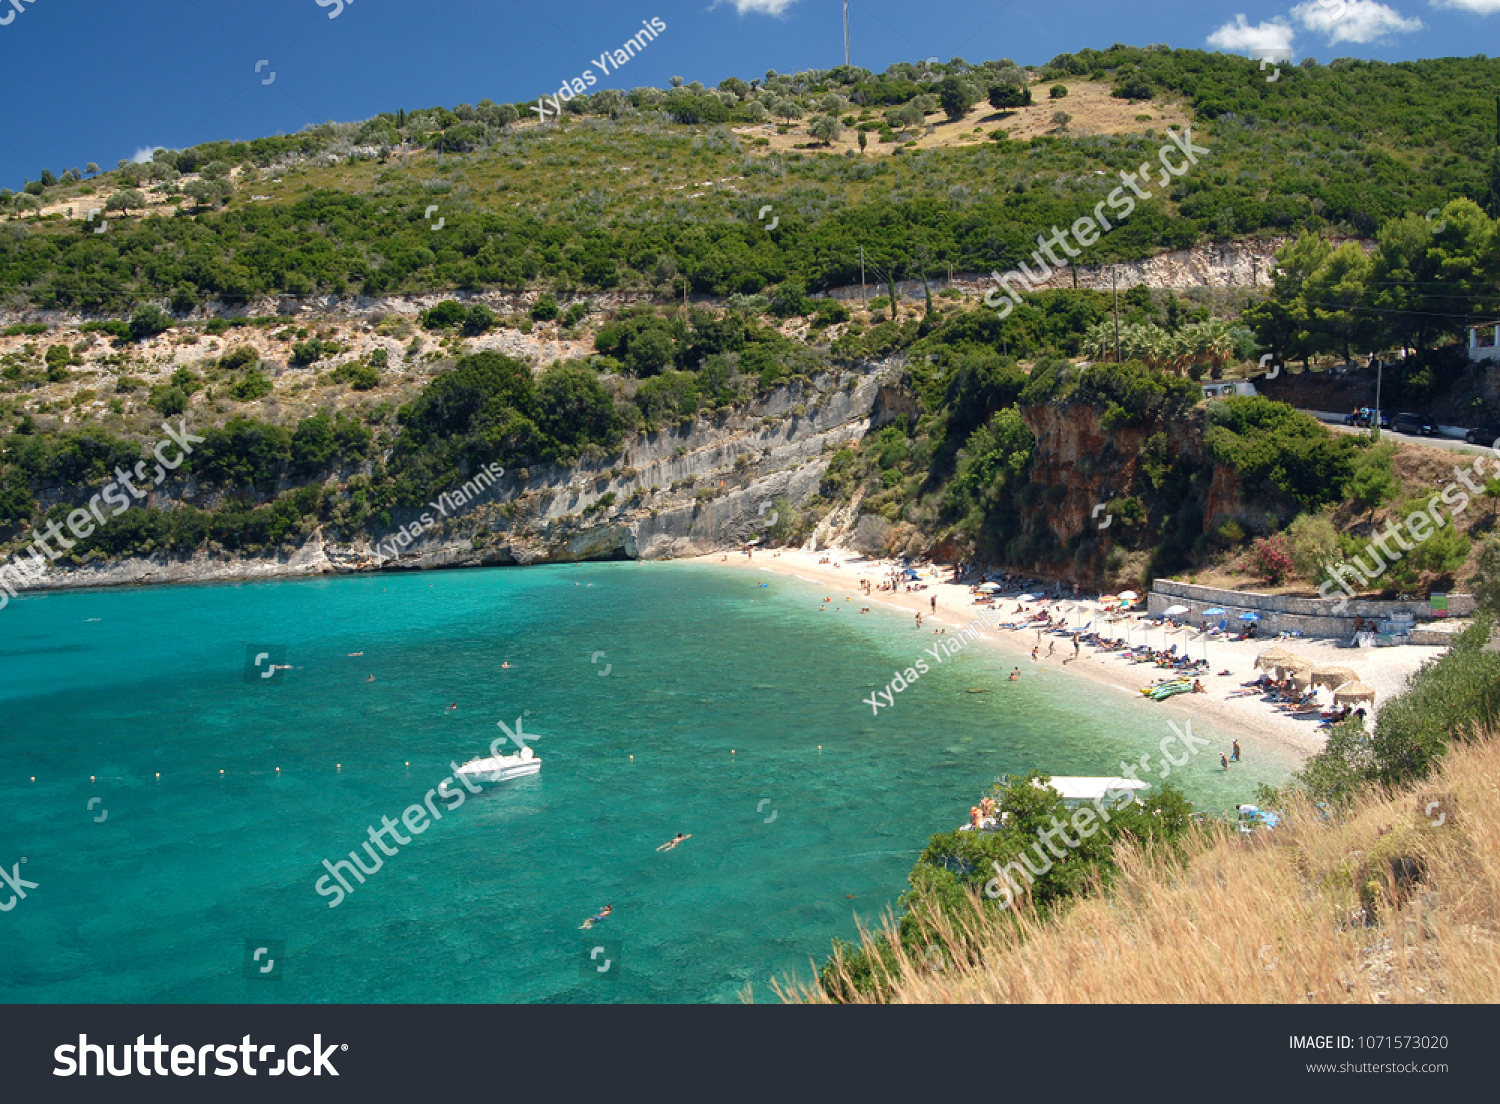 porto roma beach zakynthos greece 2016 stock photo edit now 1071573020 https www shutterstock com image photo porto roma beach zakynthos greece 2016 1071573020